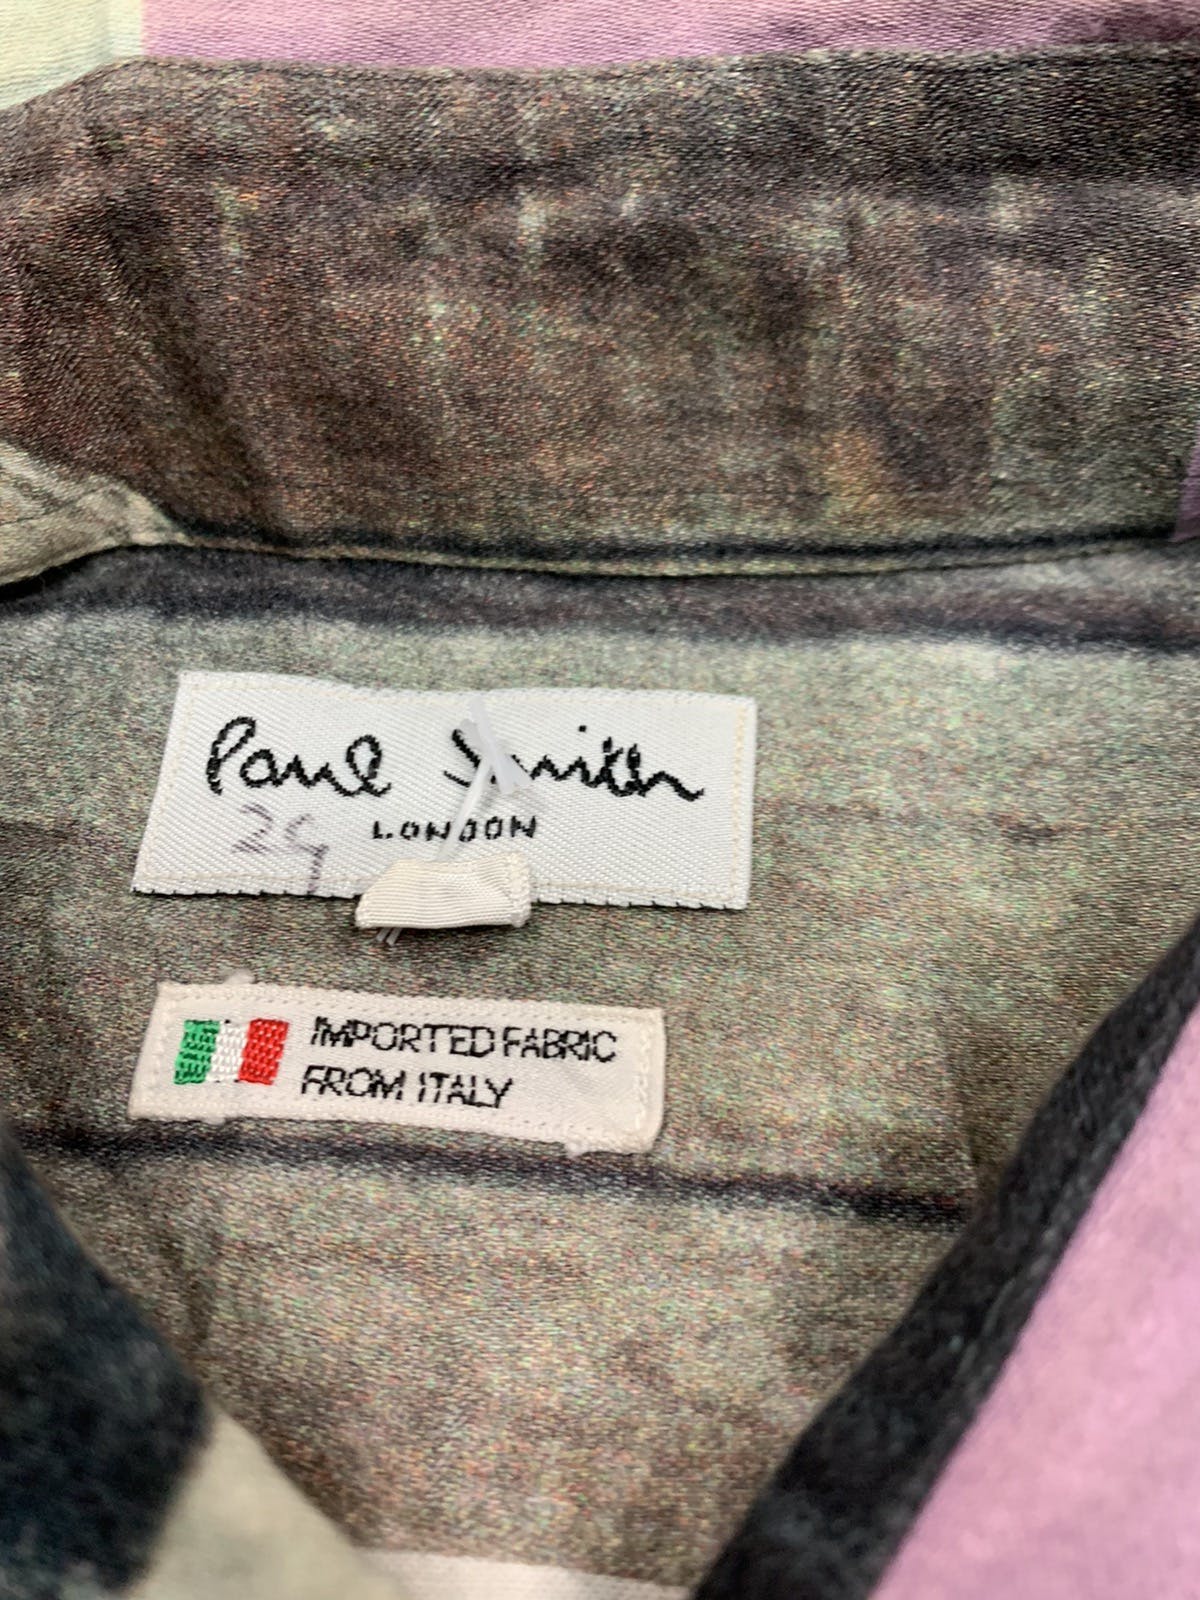 Paul smith overprint abdtract shirt button down - 4